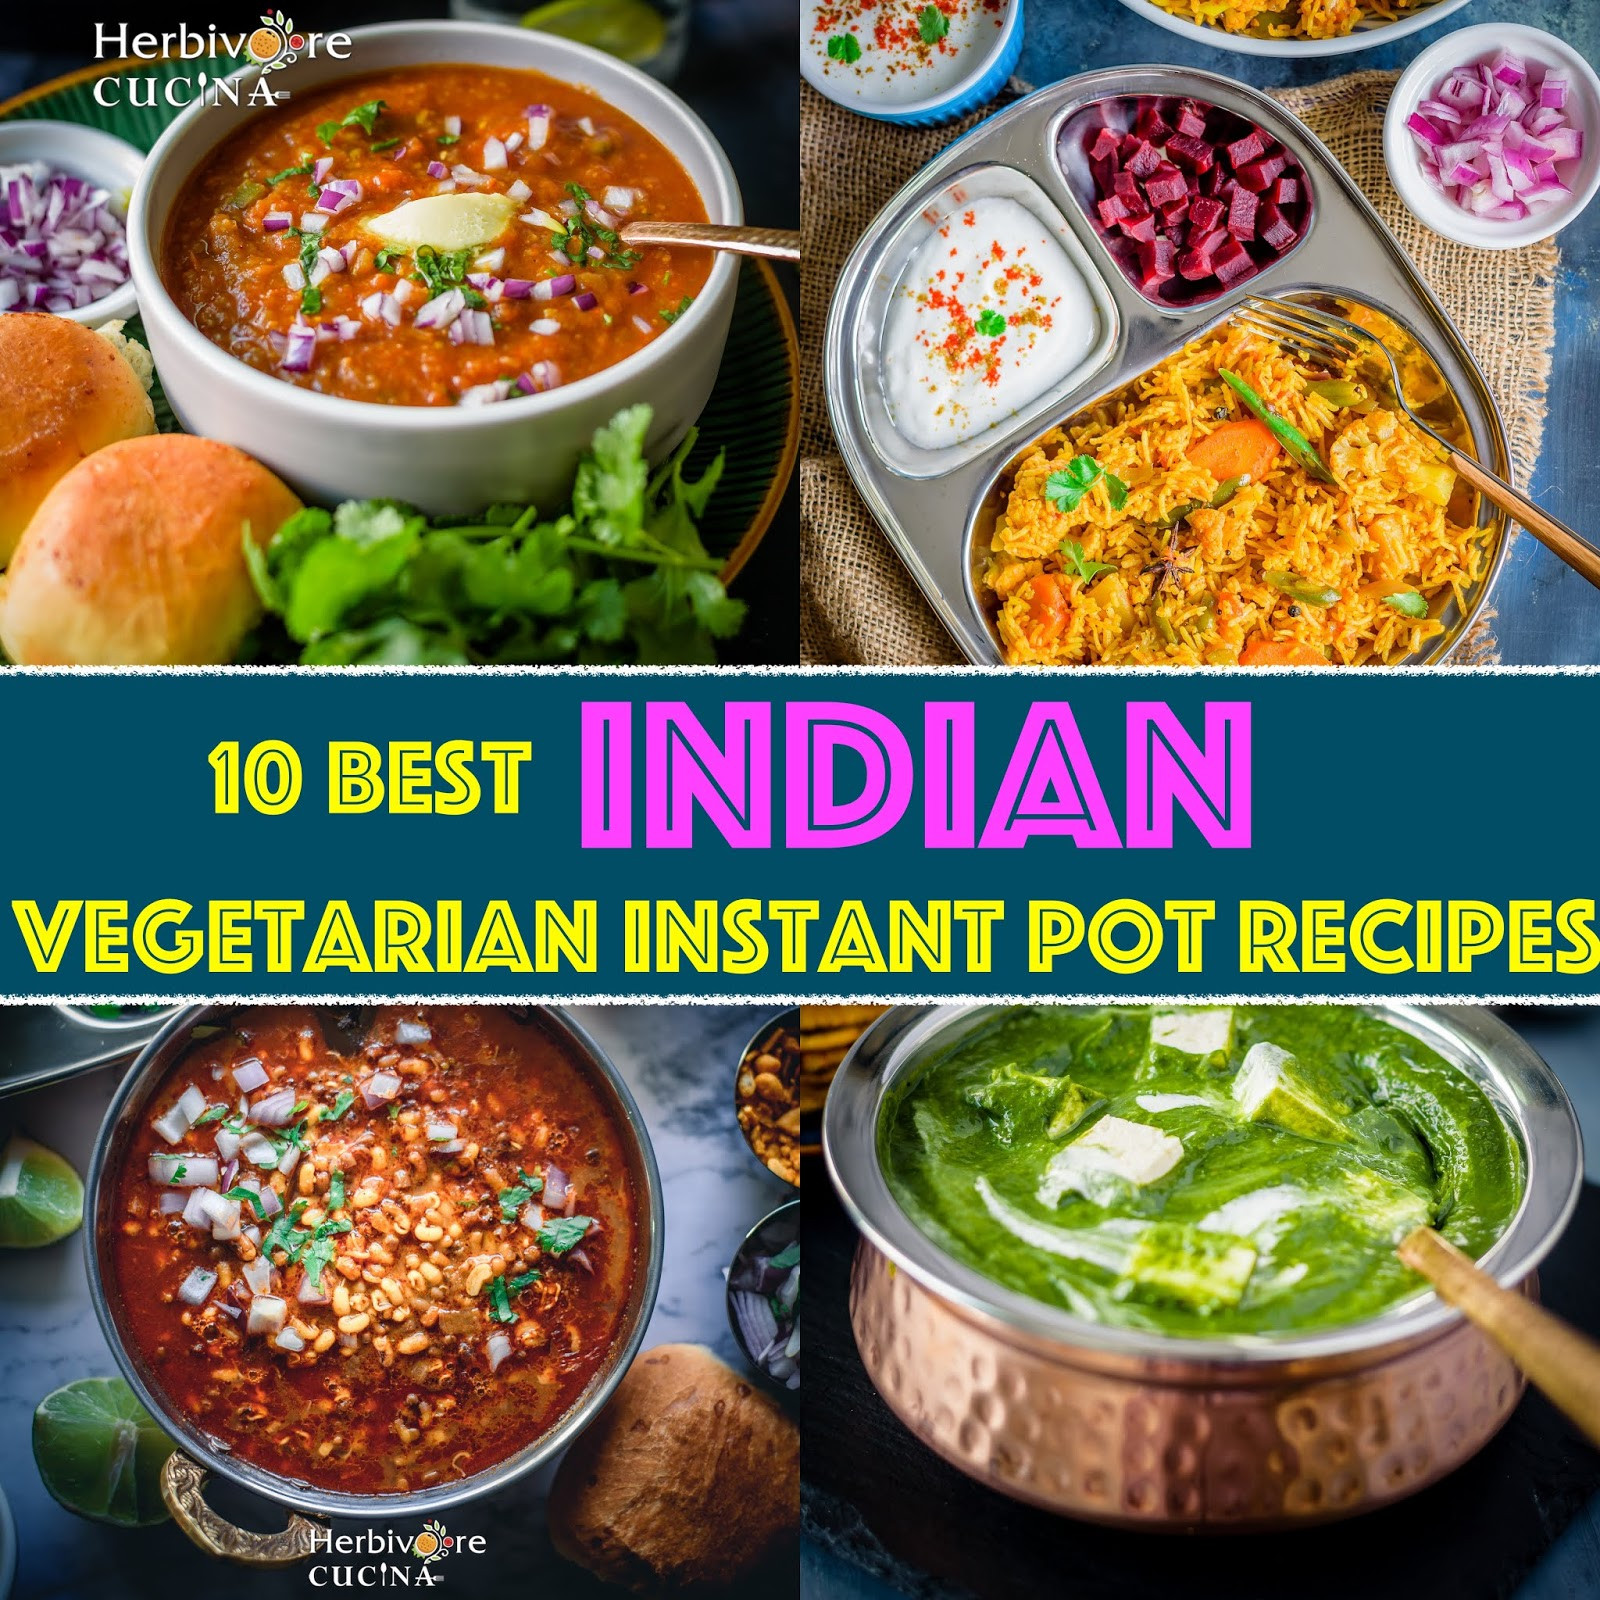 Instant Vegetarian Dinner Recipes
 Herbivore Cucina 10 BEST Indian Ve arian Recipes for